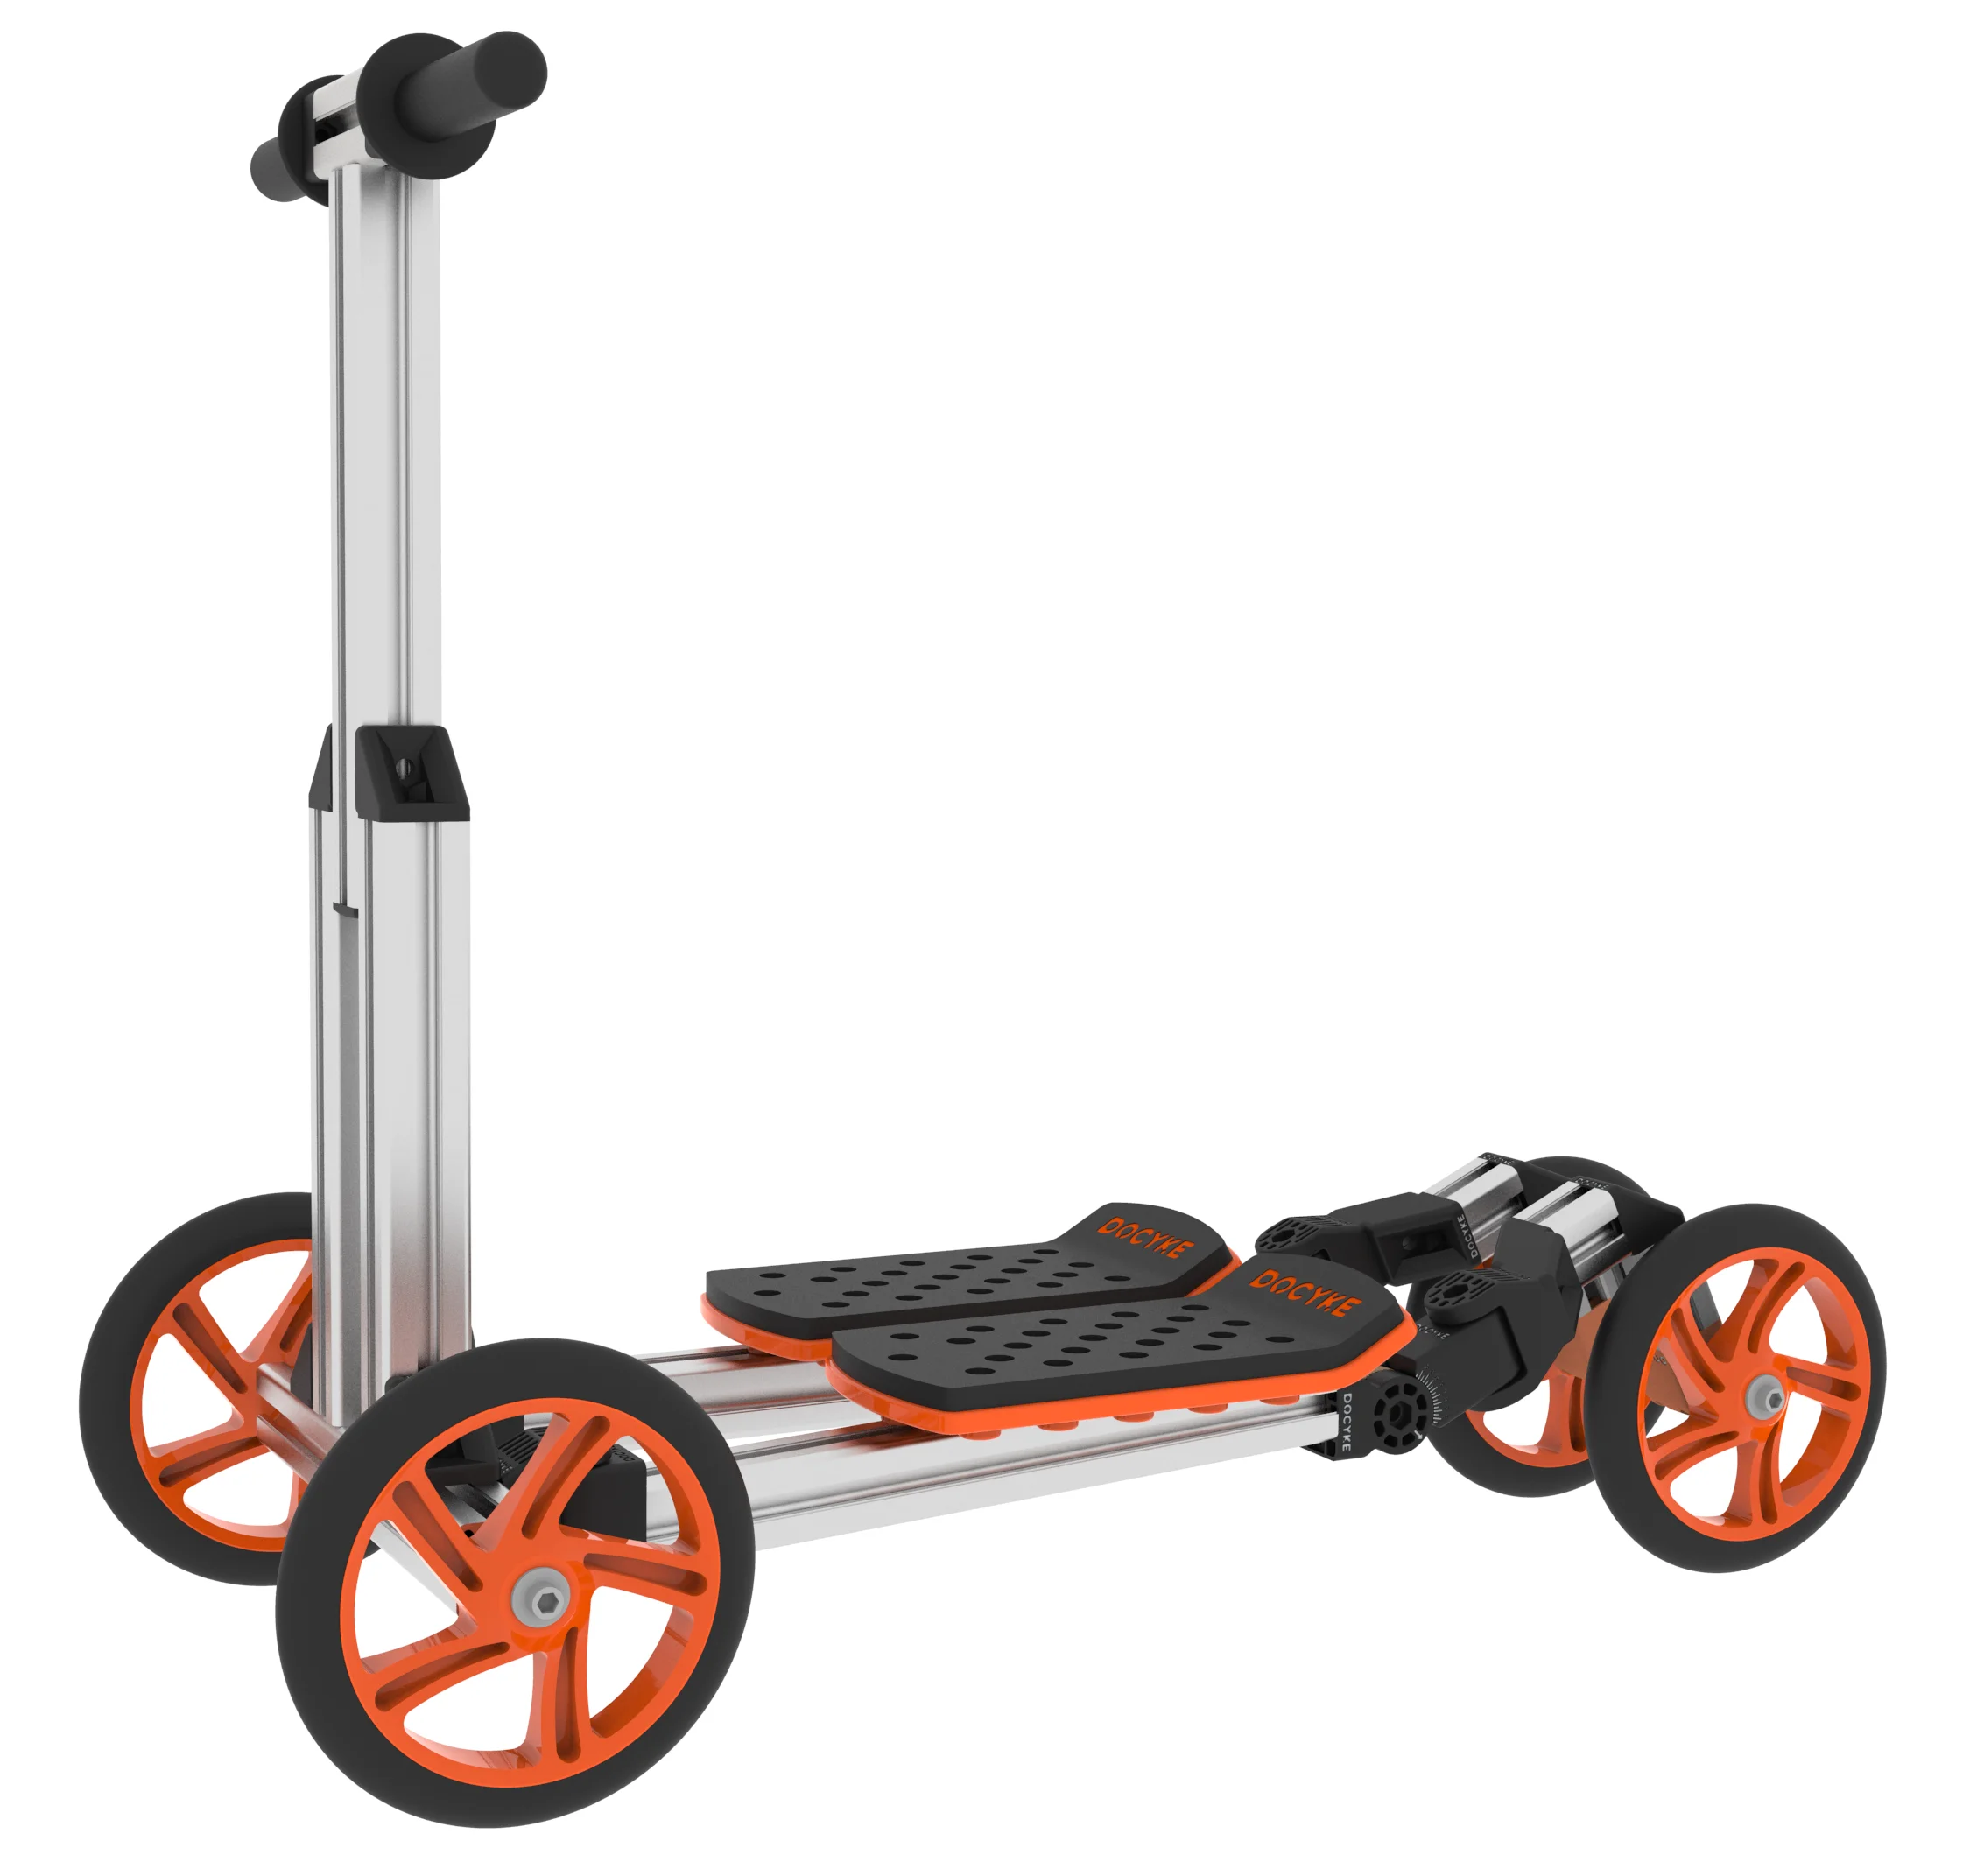 

Docyke New product 2020 construction M-kit Outdoor Fun Sports 3 Wheel Modular assemble Ride scooter